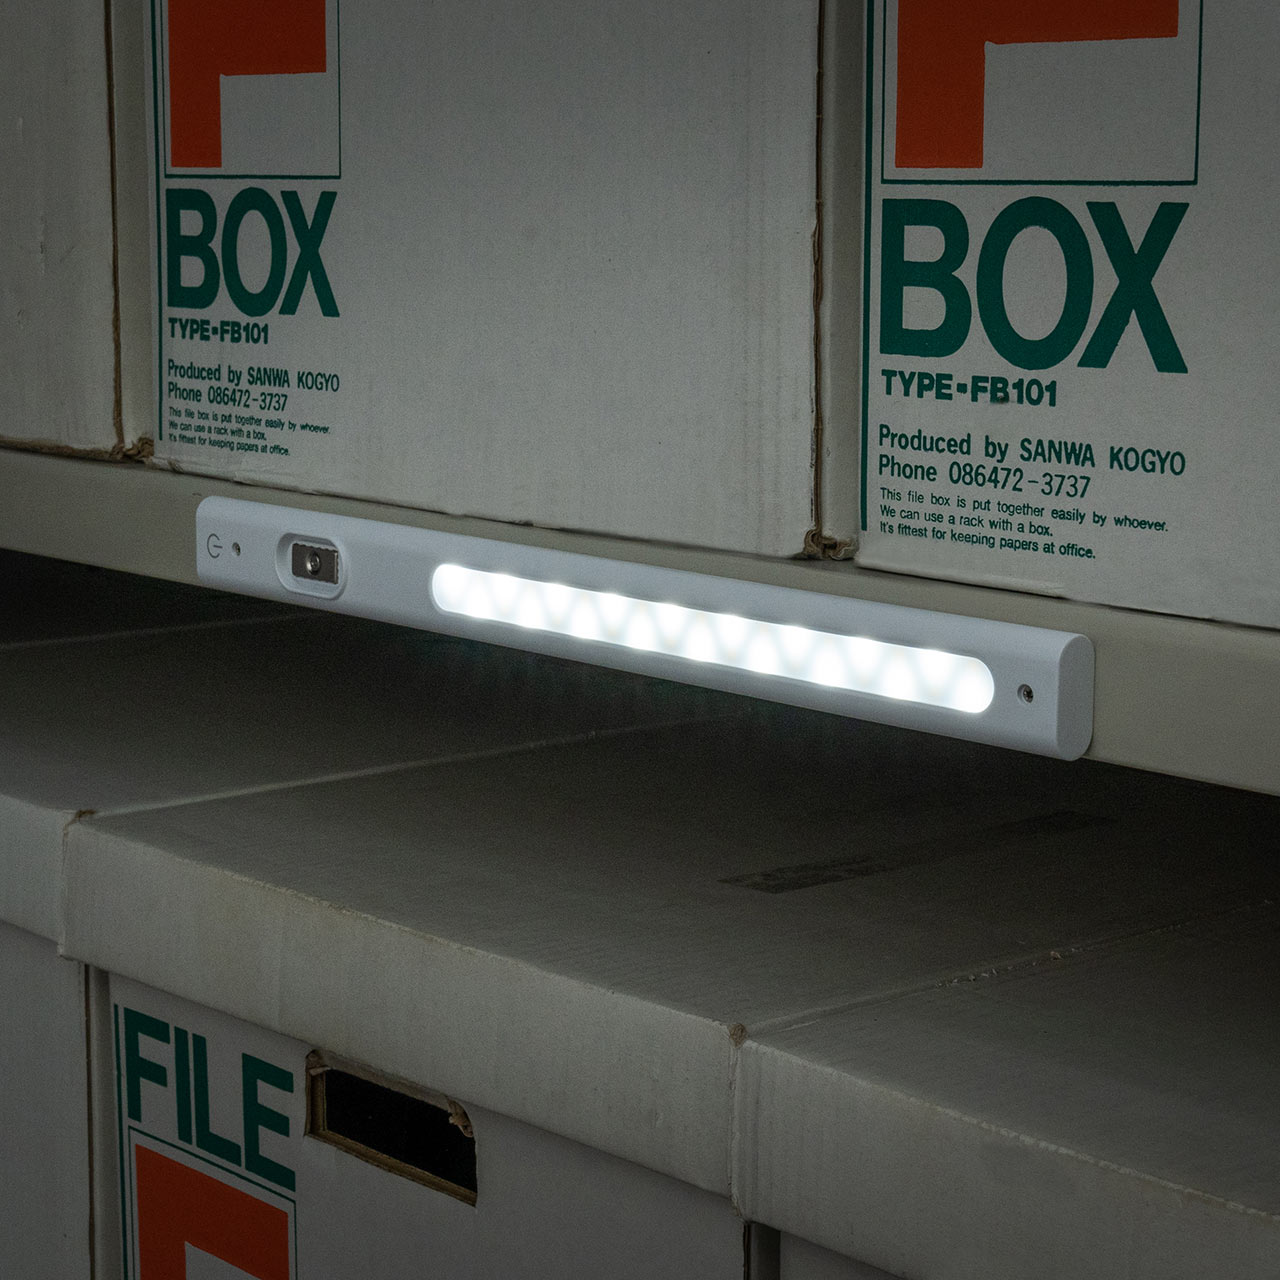 LEDデスクライト ライトスタンド 充電式 コードレス 角度調整可能 3段階調色 無段階調光 最大263ルーメン マグネット タッチセンサー ライト着脱式 800-LED047